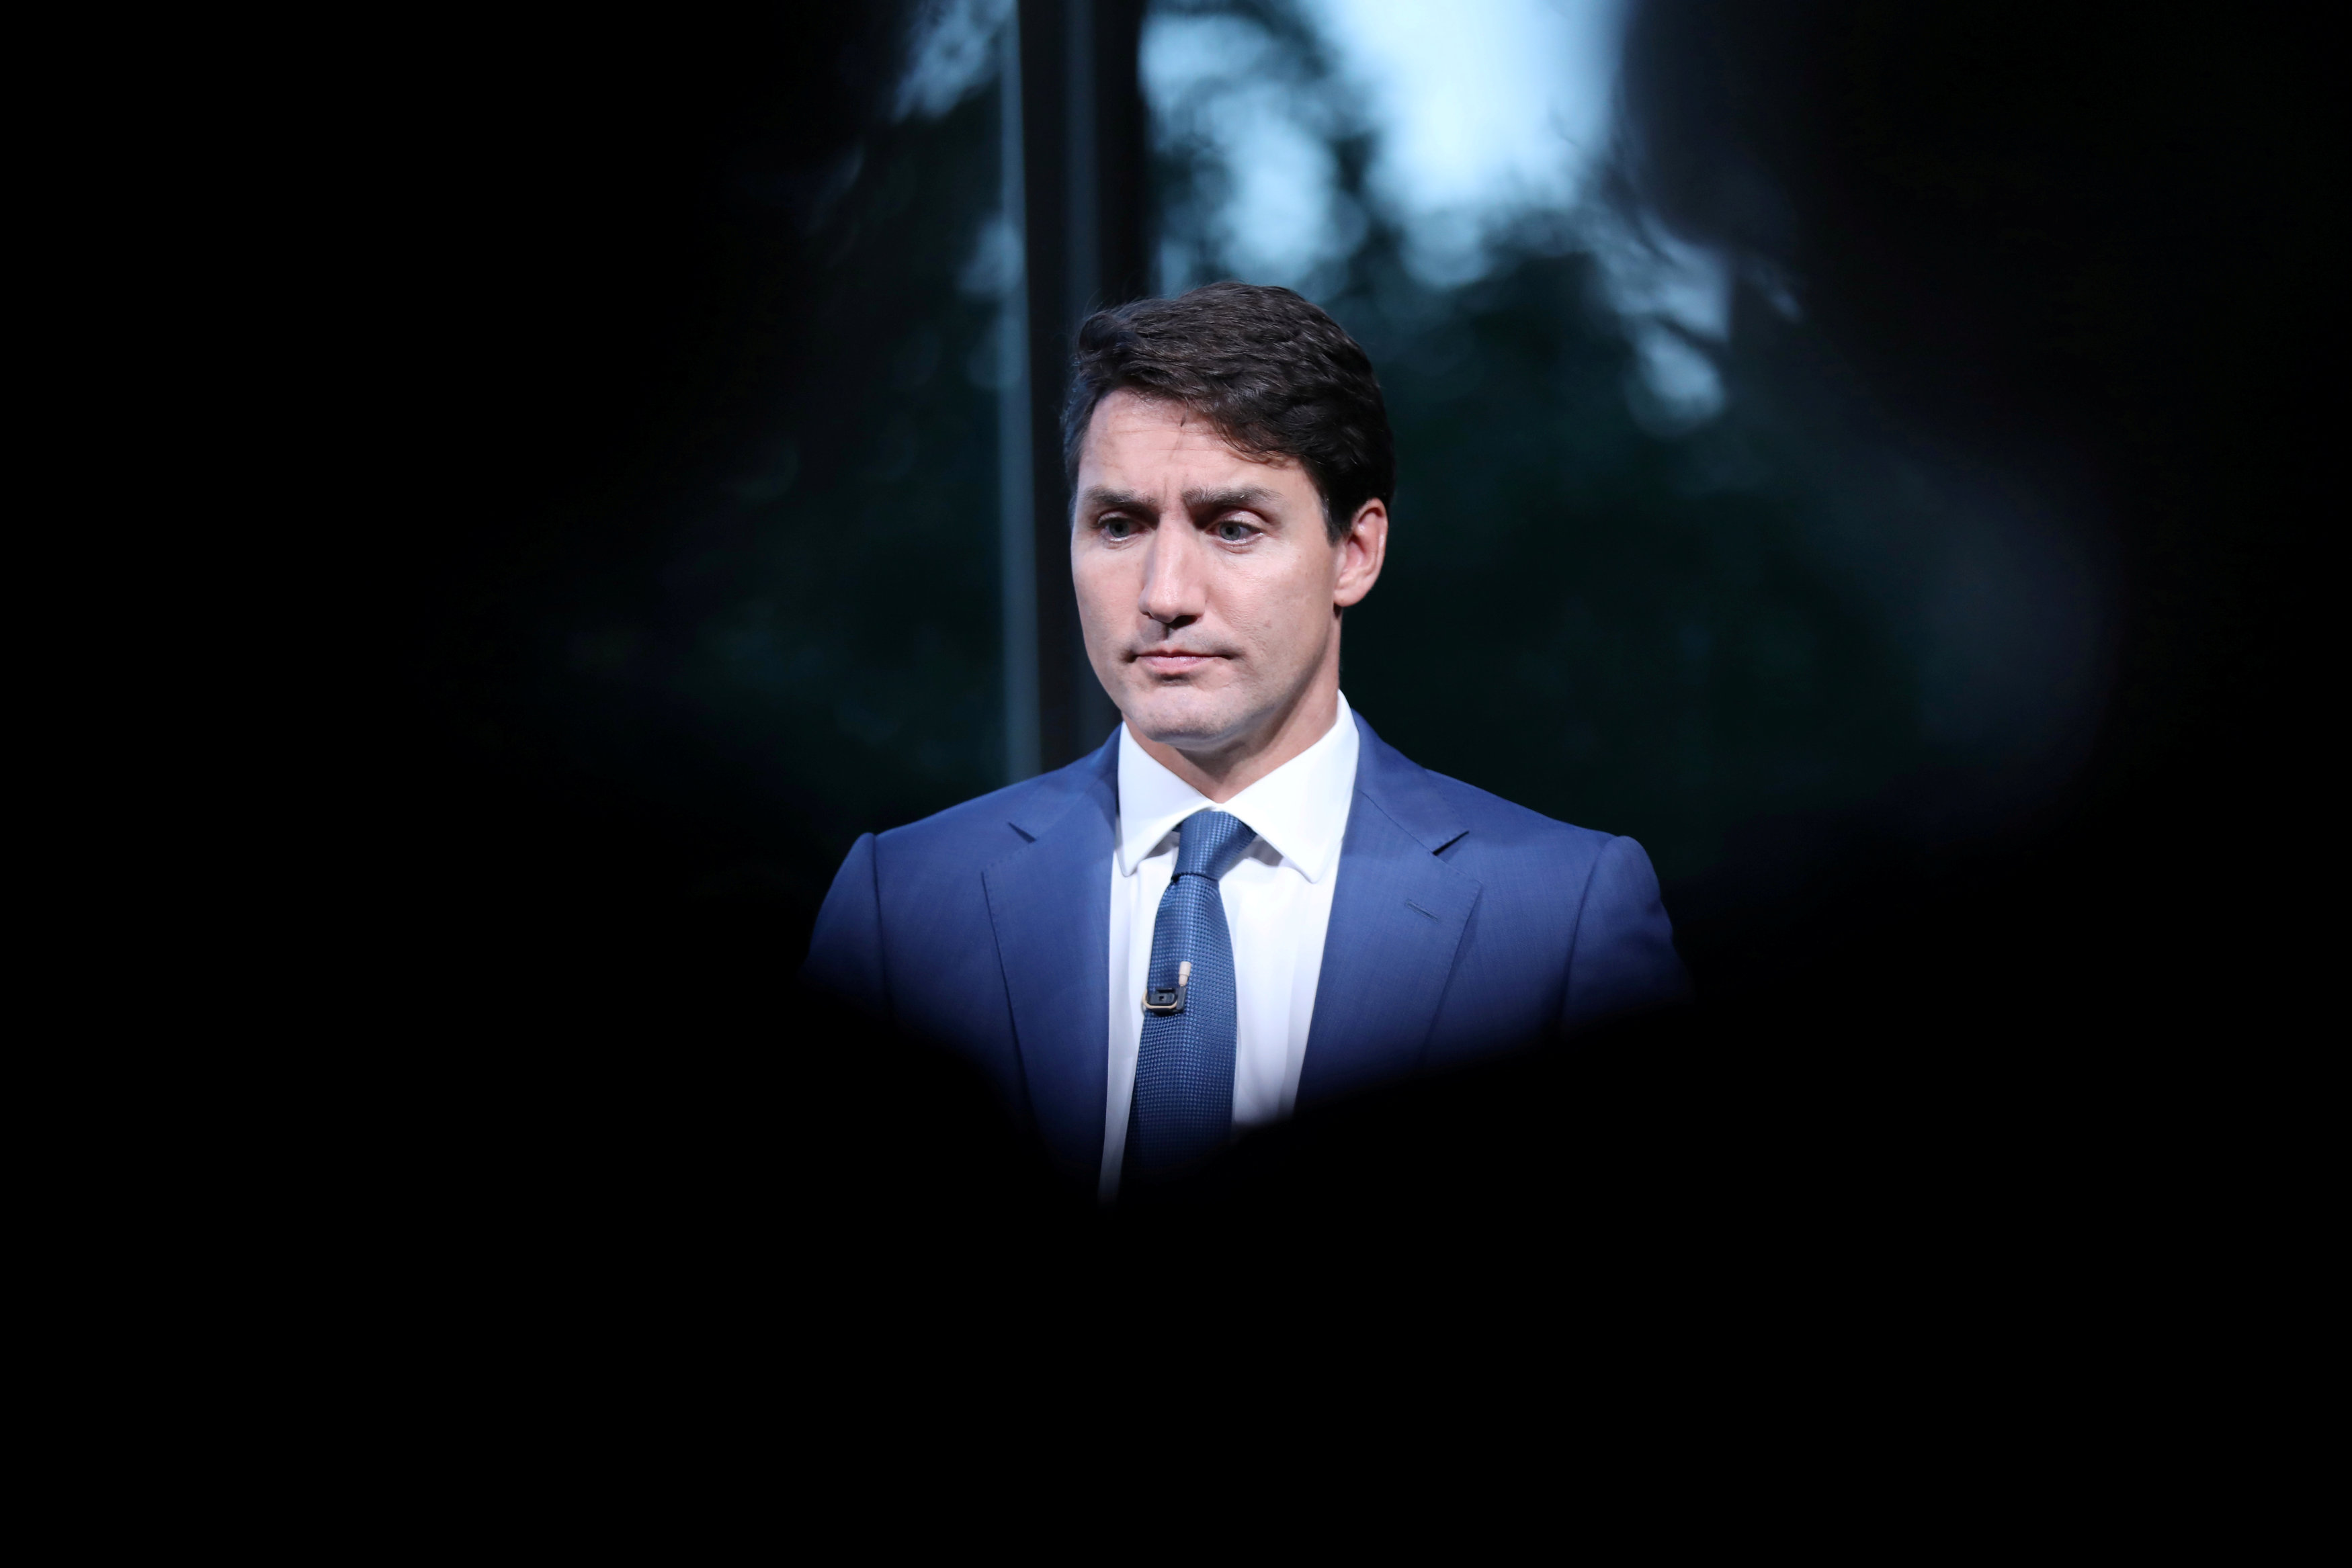 Trudeau under growing pressure to get NAFTA deal done